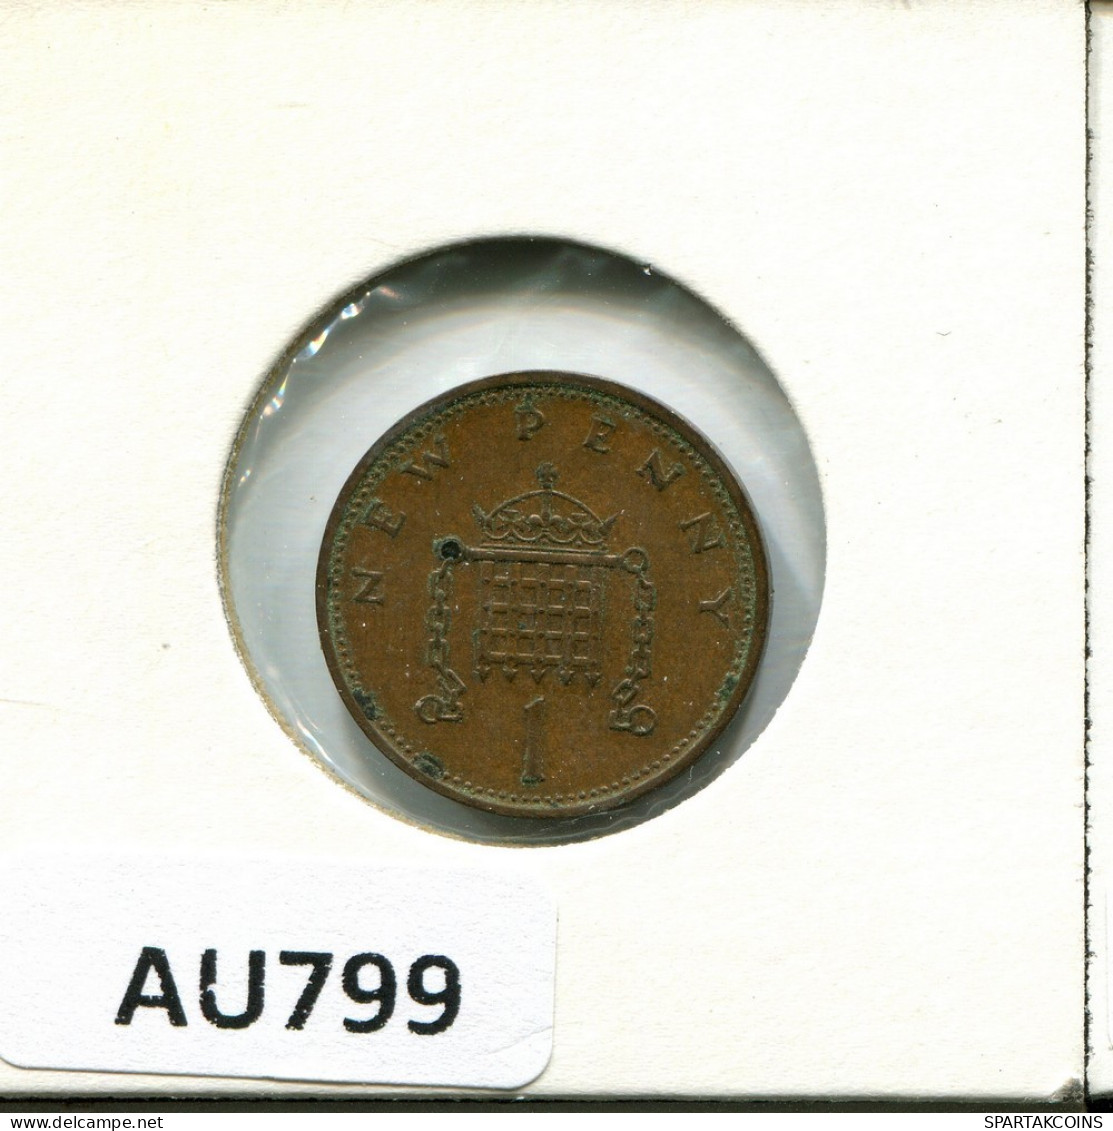 NEW PENNY 1971 UK GROßBRITANNIEN GREAT BRITAIN Münze #AU799.D.A - 1 Penny & 1 New Penny